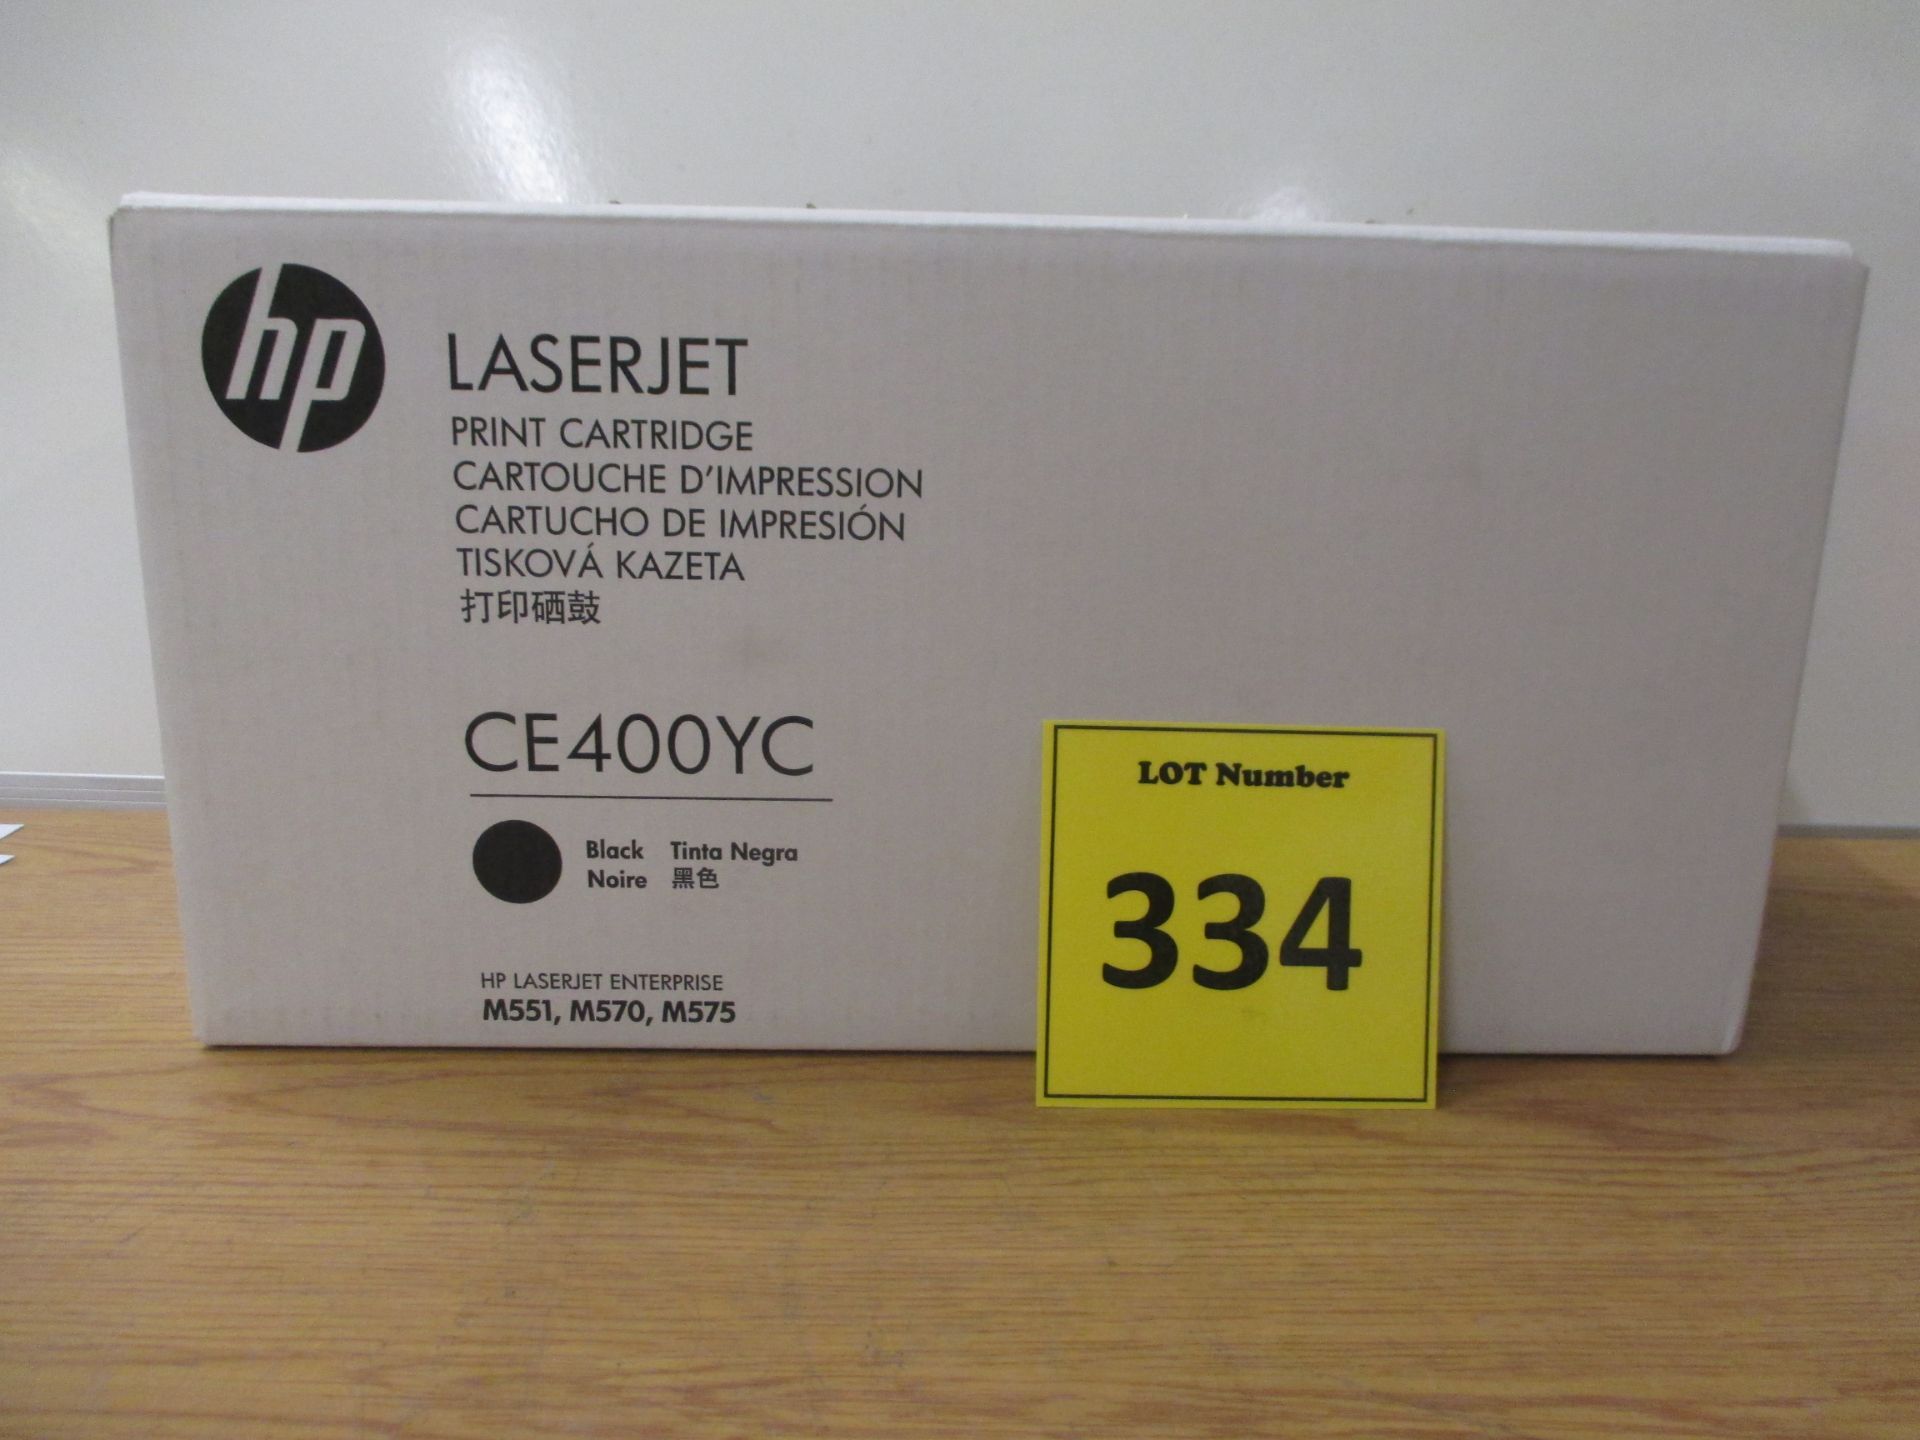 HP GENUINE ORIGINAL BLACK PRINT CARTRIDGE (CE400YC) FOR HP LASERJET ENTERPRISE M551, M570, M575. BOX